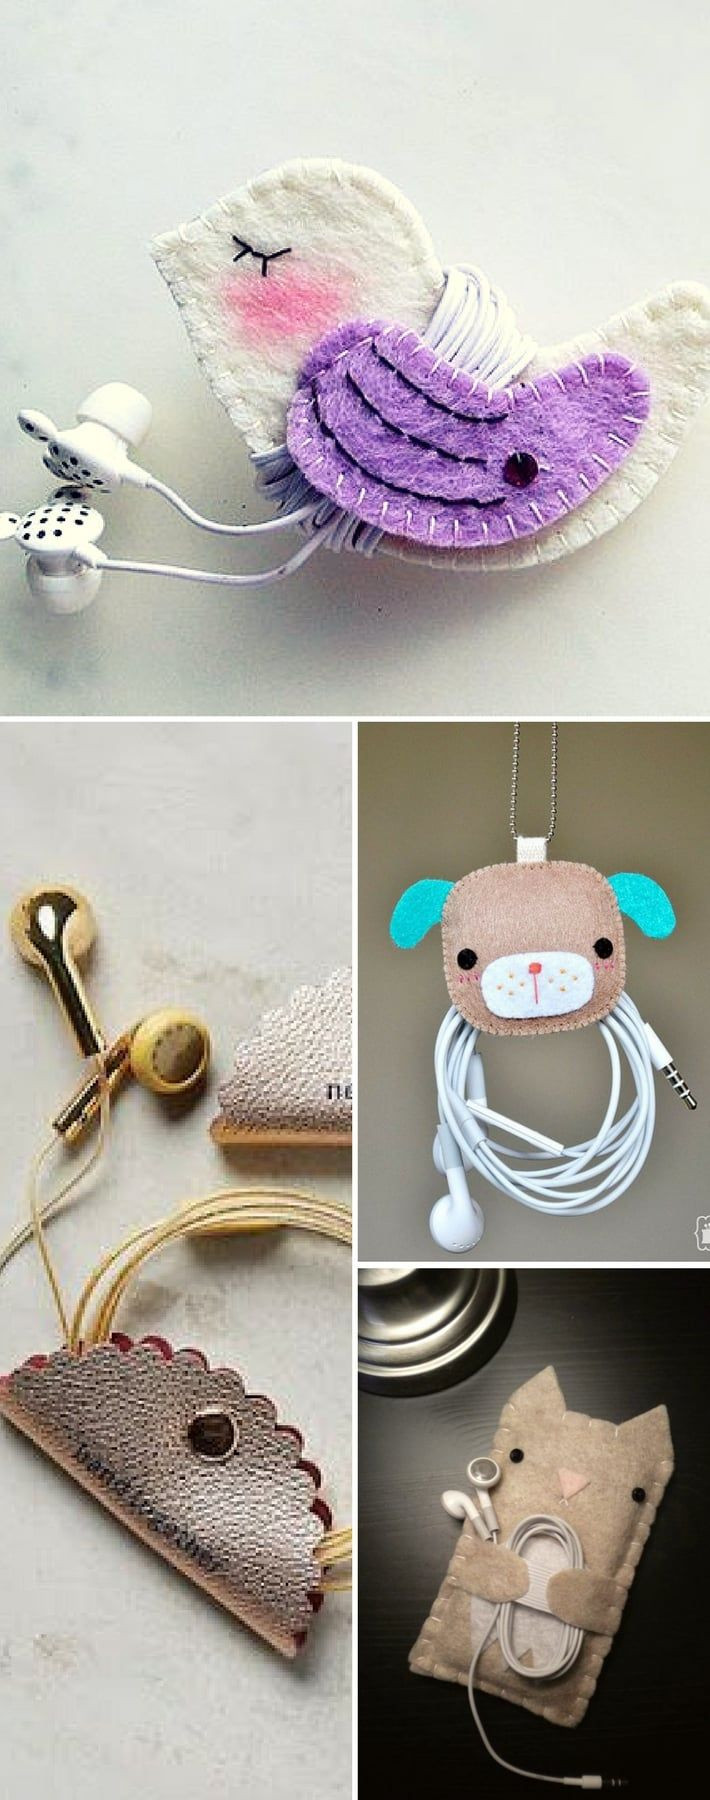 DIY Gift Ideas For Girlfriend
 Best 25 Diy ts for girlfriend ideas on Pinterest